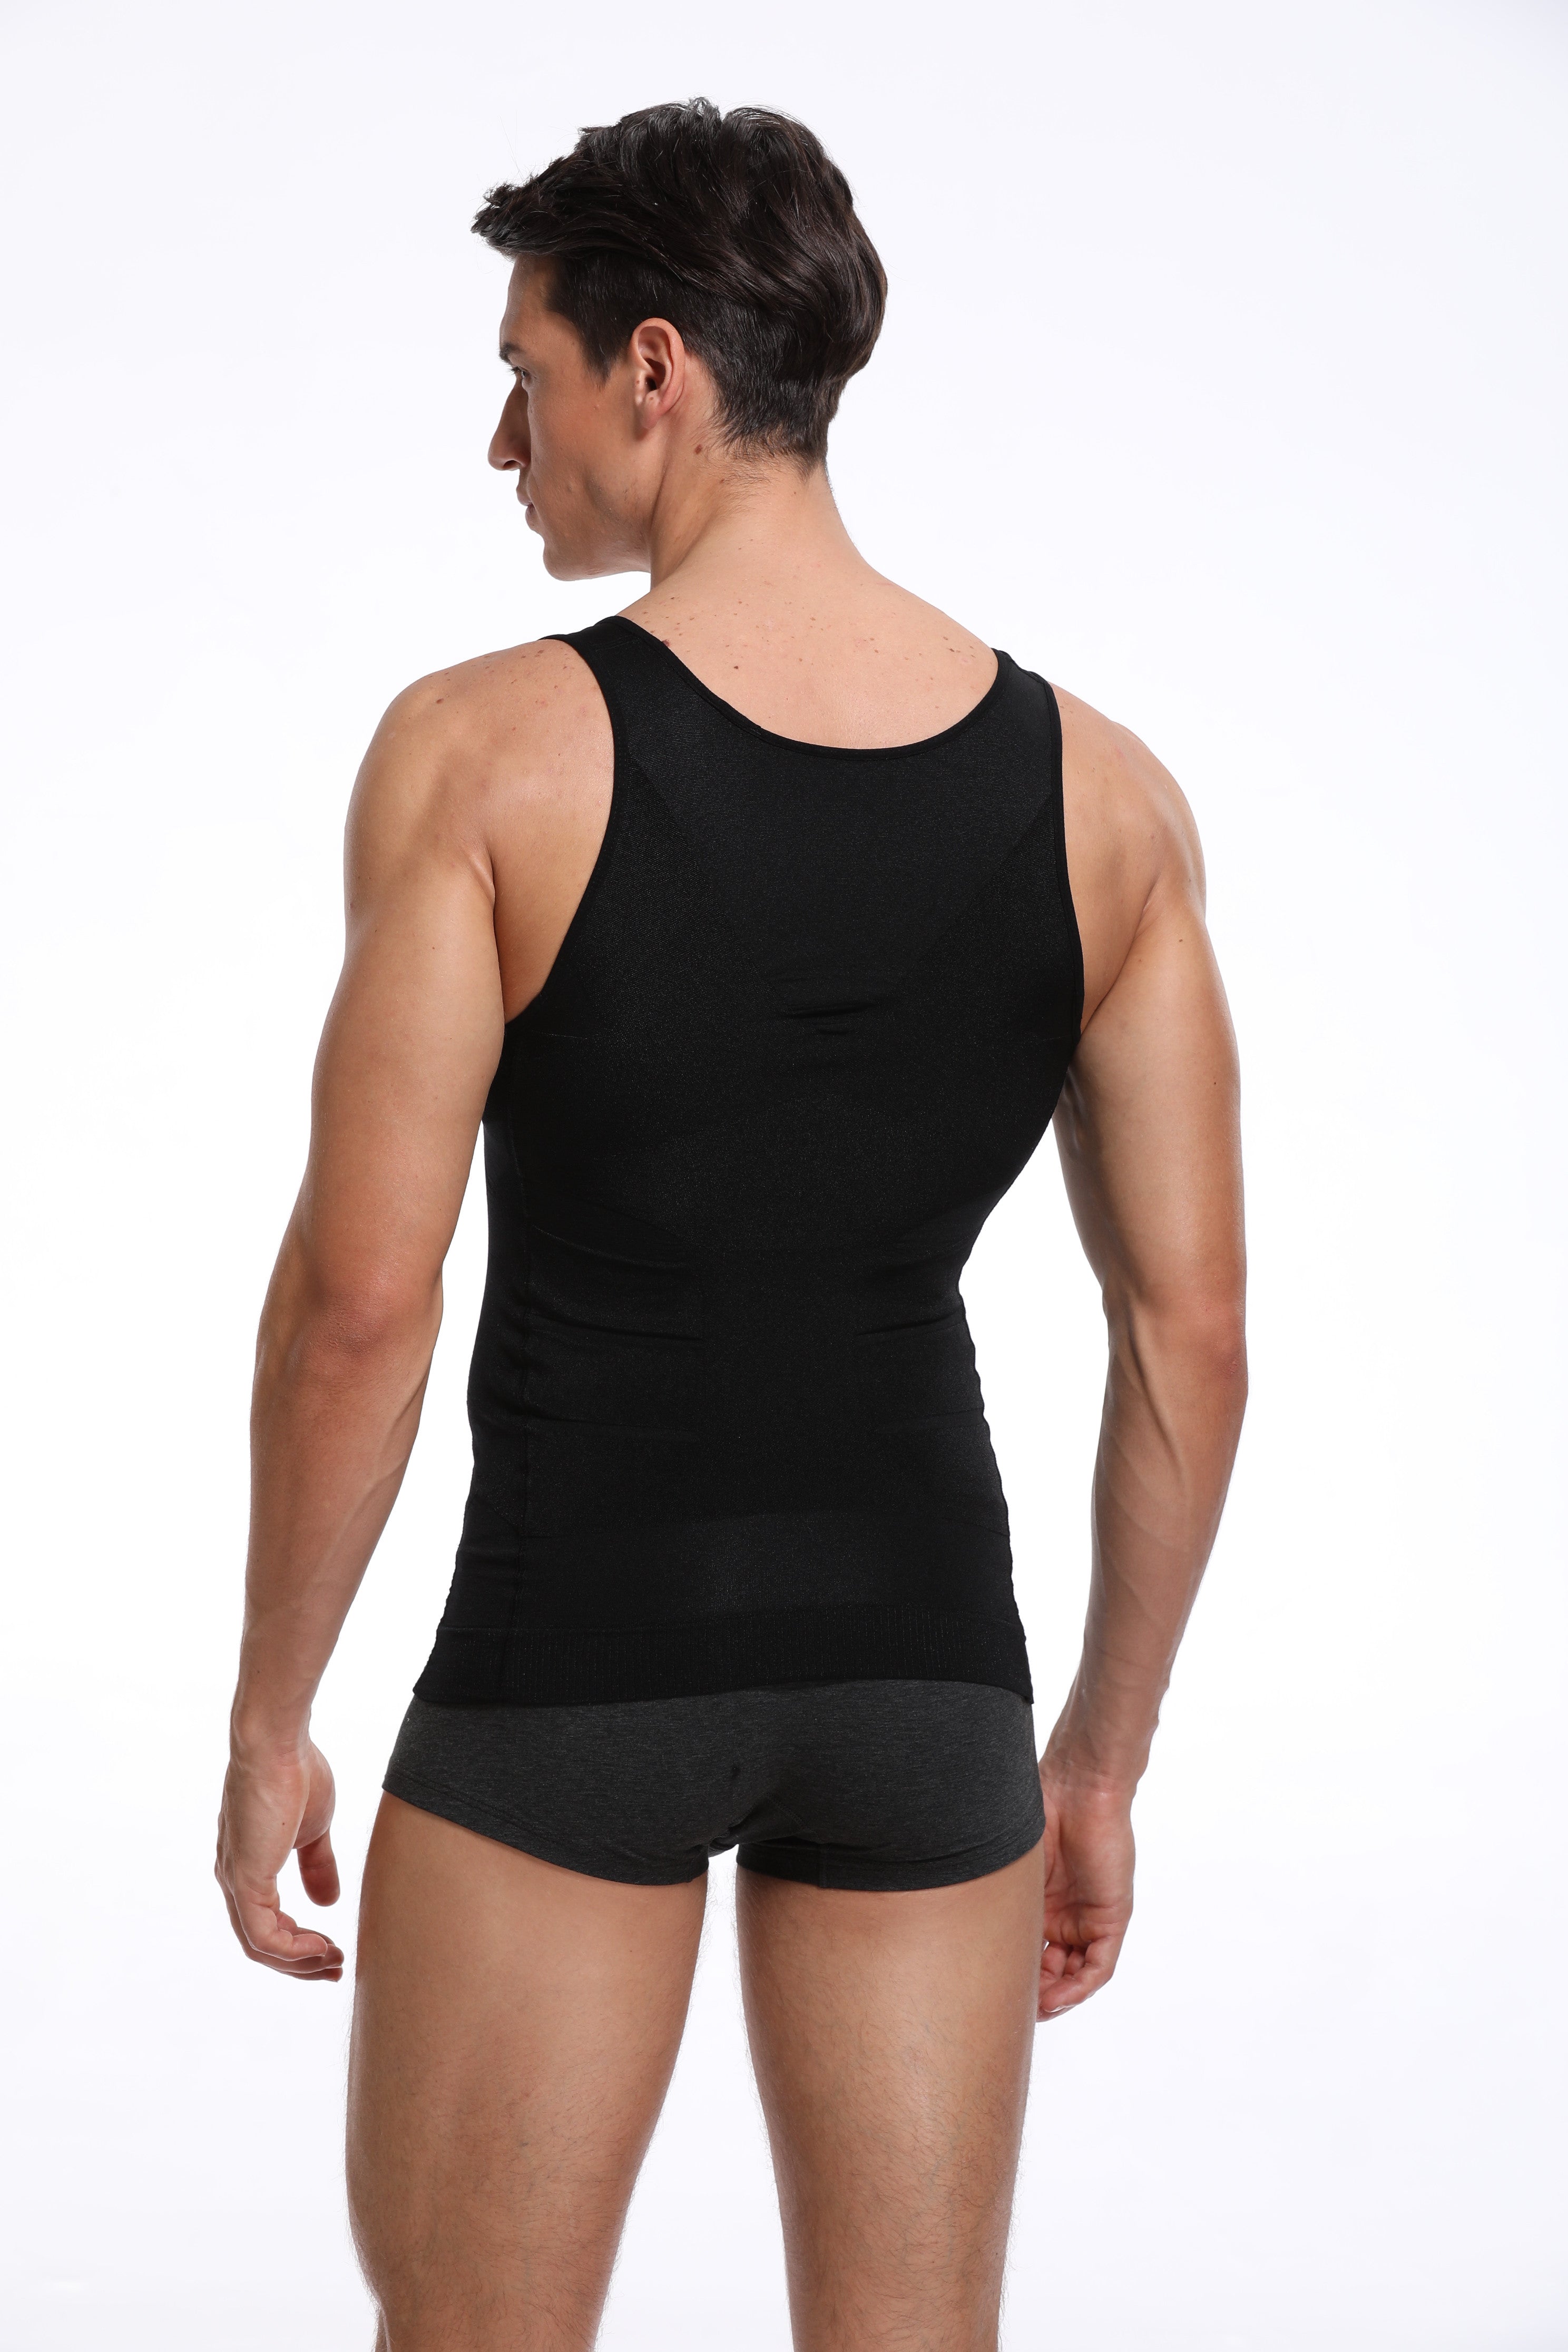 Men's Slimming Body Shaper Vest for Men Slim Tummy Control